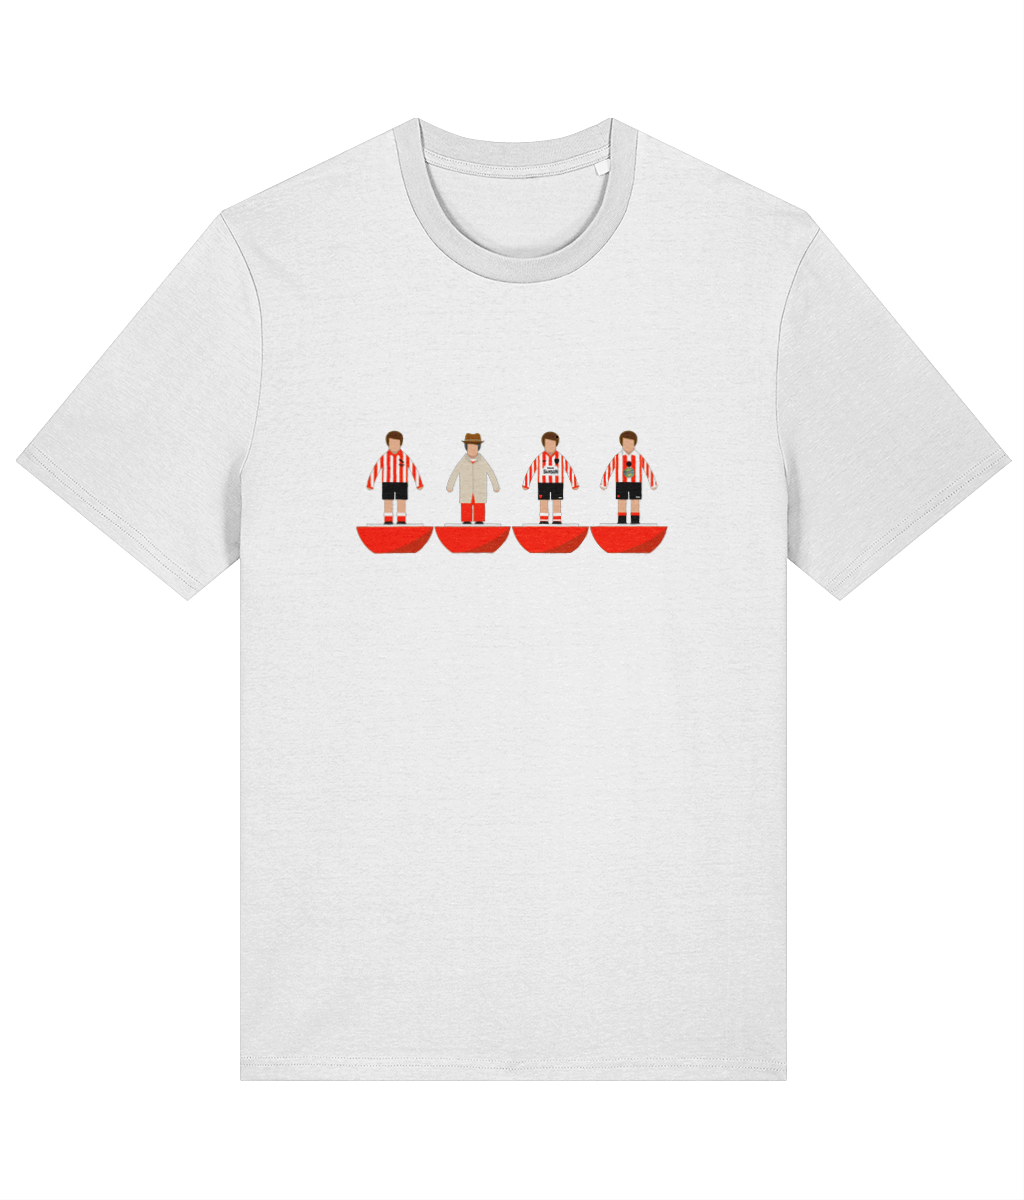 Football Kits 'Sunderland combined' Unisex T-Shirt